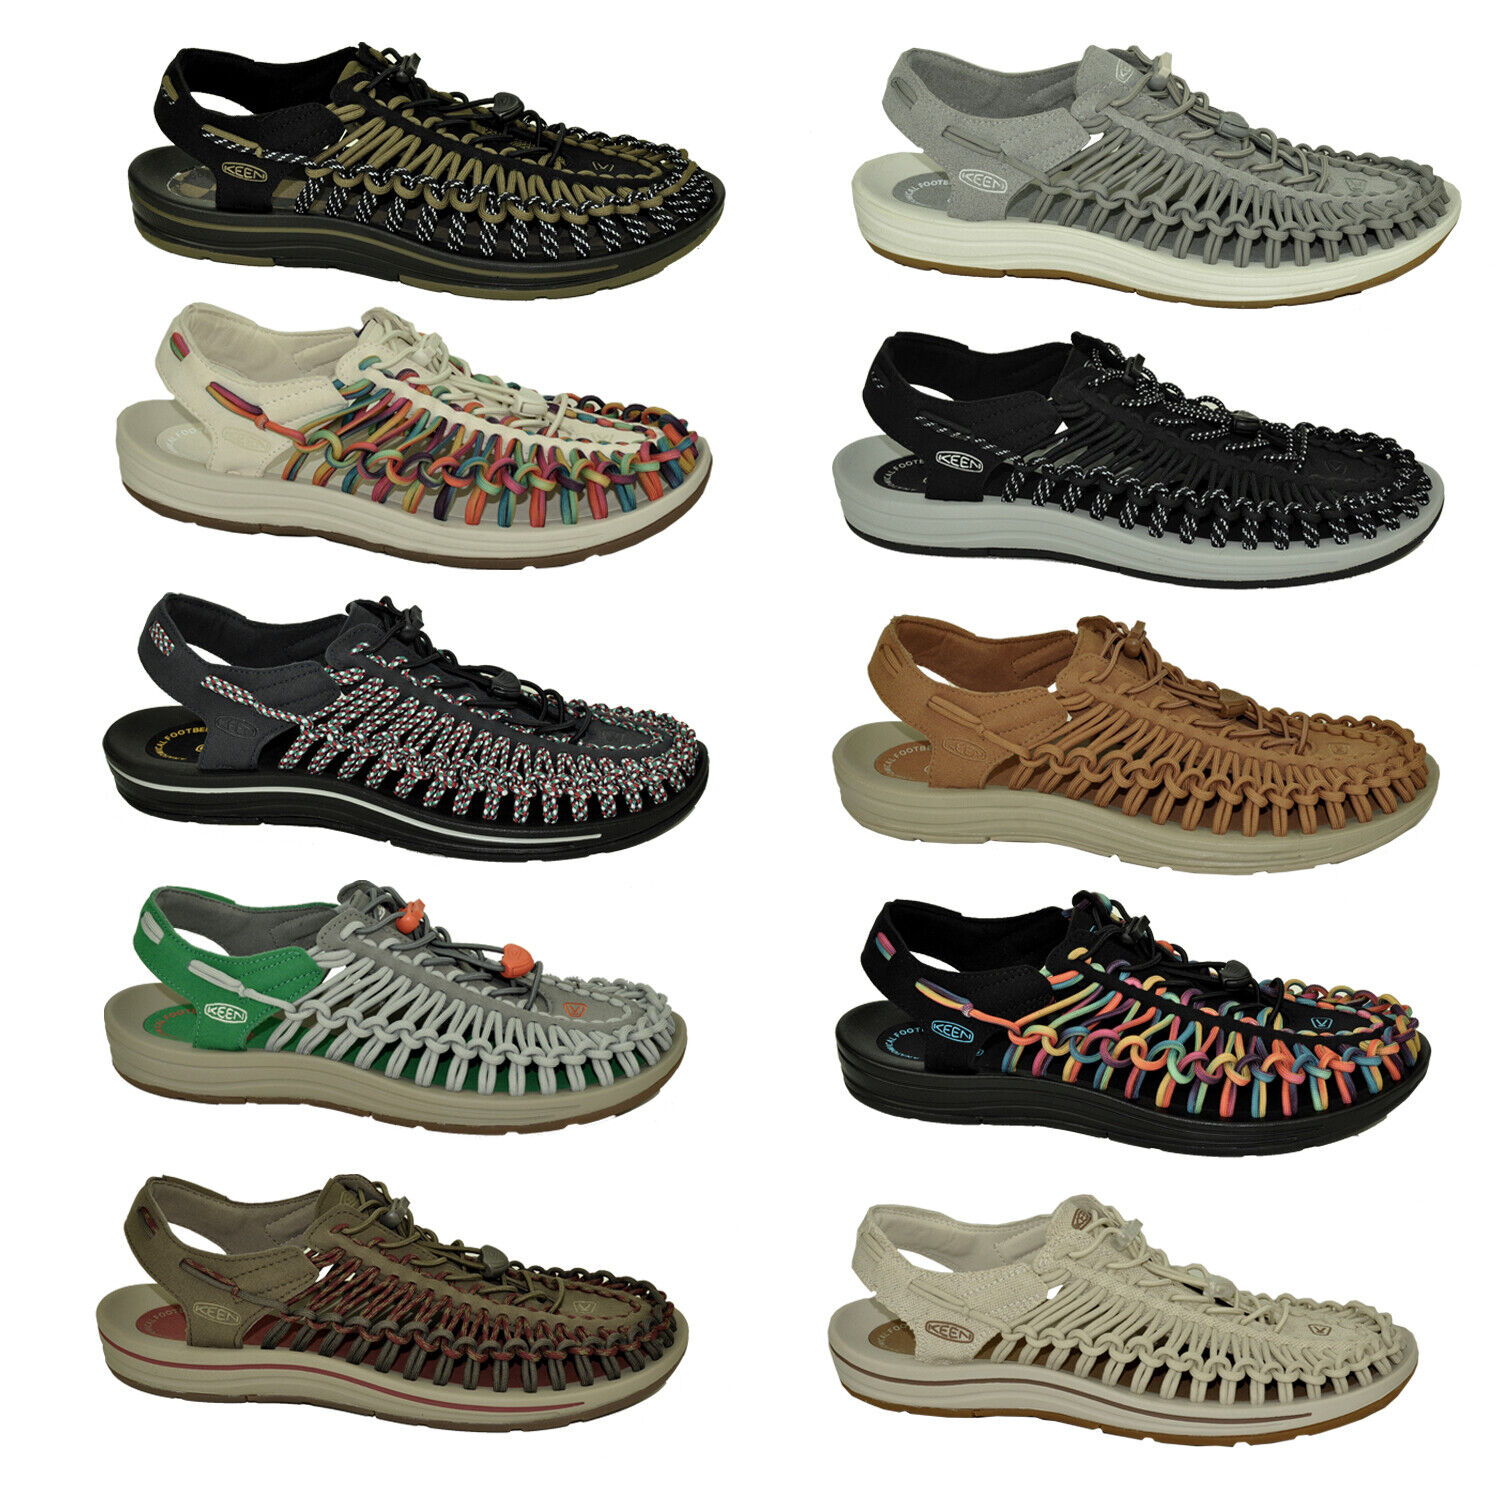 KEEN Uneek Sandalen Trekkingsandalen Ultra Leicht Leder Canvas Herren Sneaker Modell - Farbe 1026340 - Olive Schuhgröße EUR 47 - UK 12 - US 13